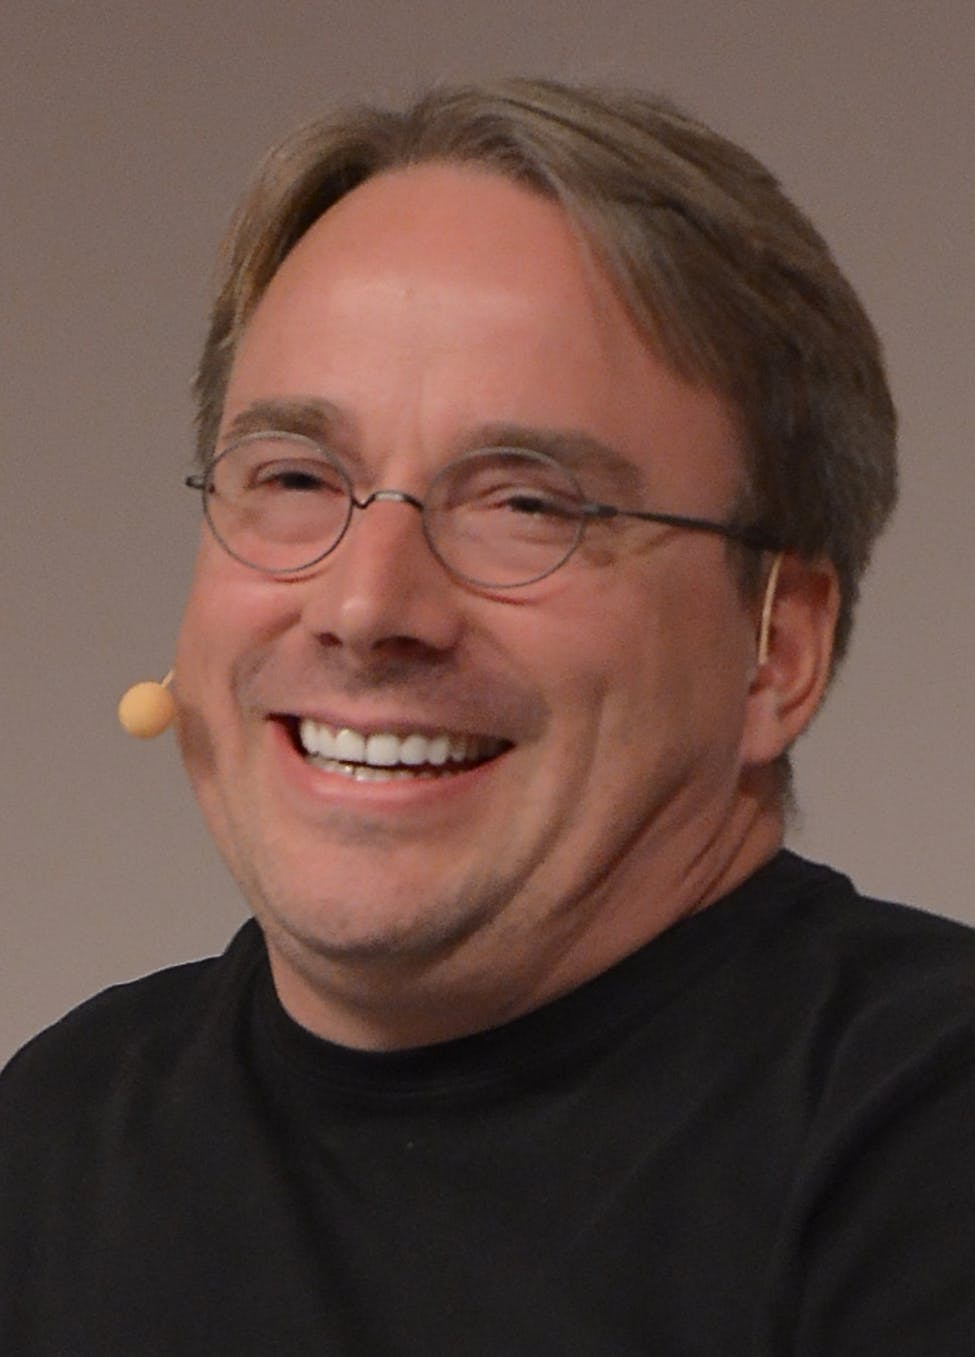 LinuxCon_Europe_Linus_Torvalds_03_(cropped).jpg